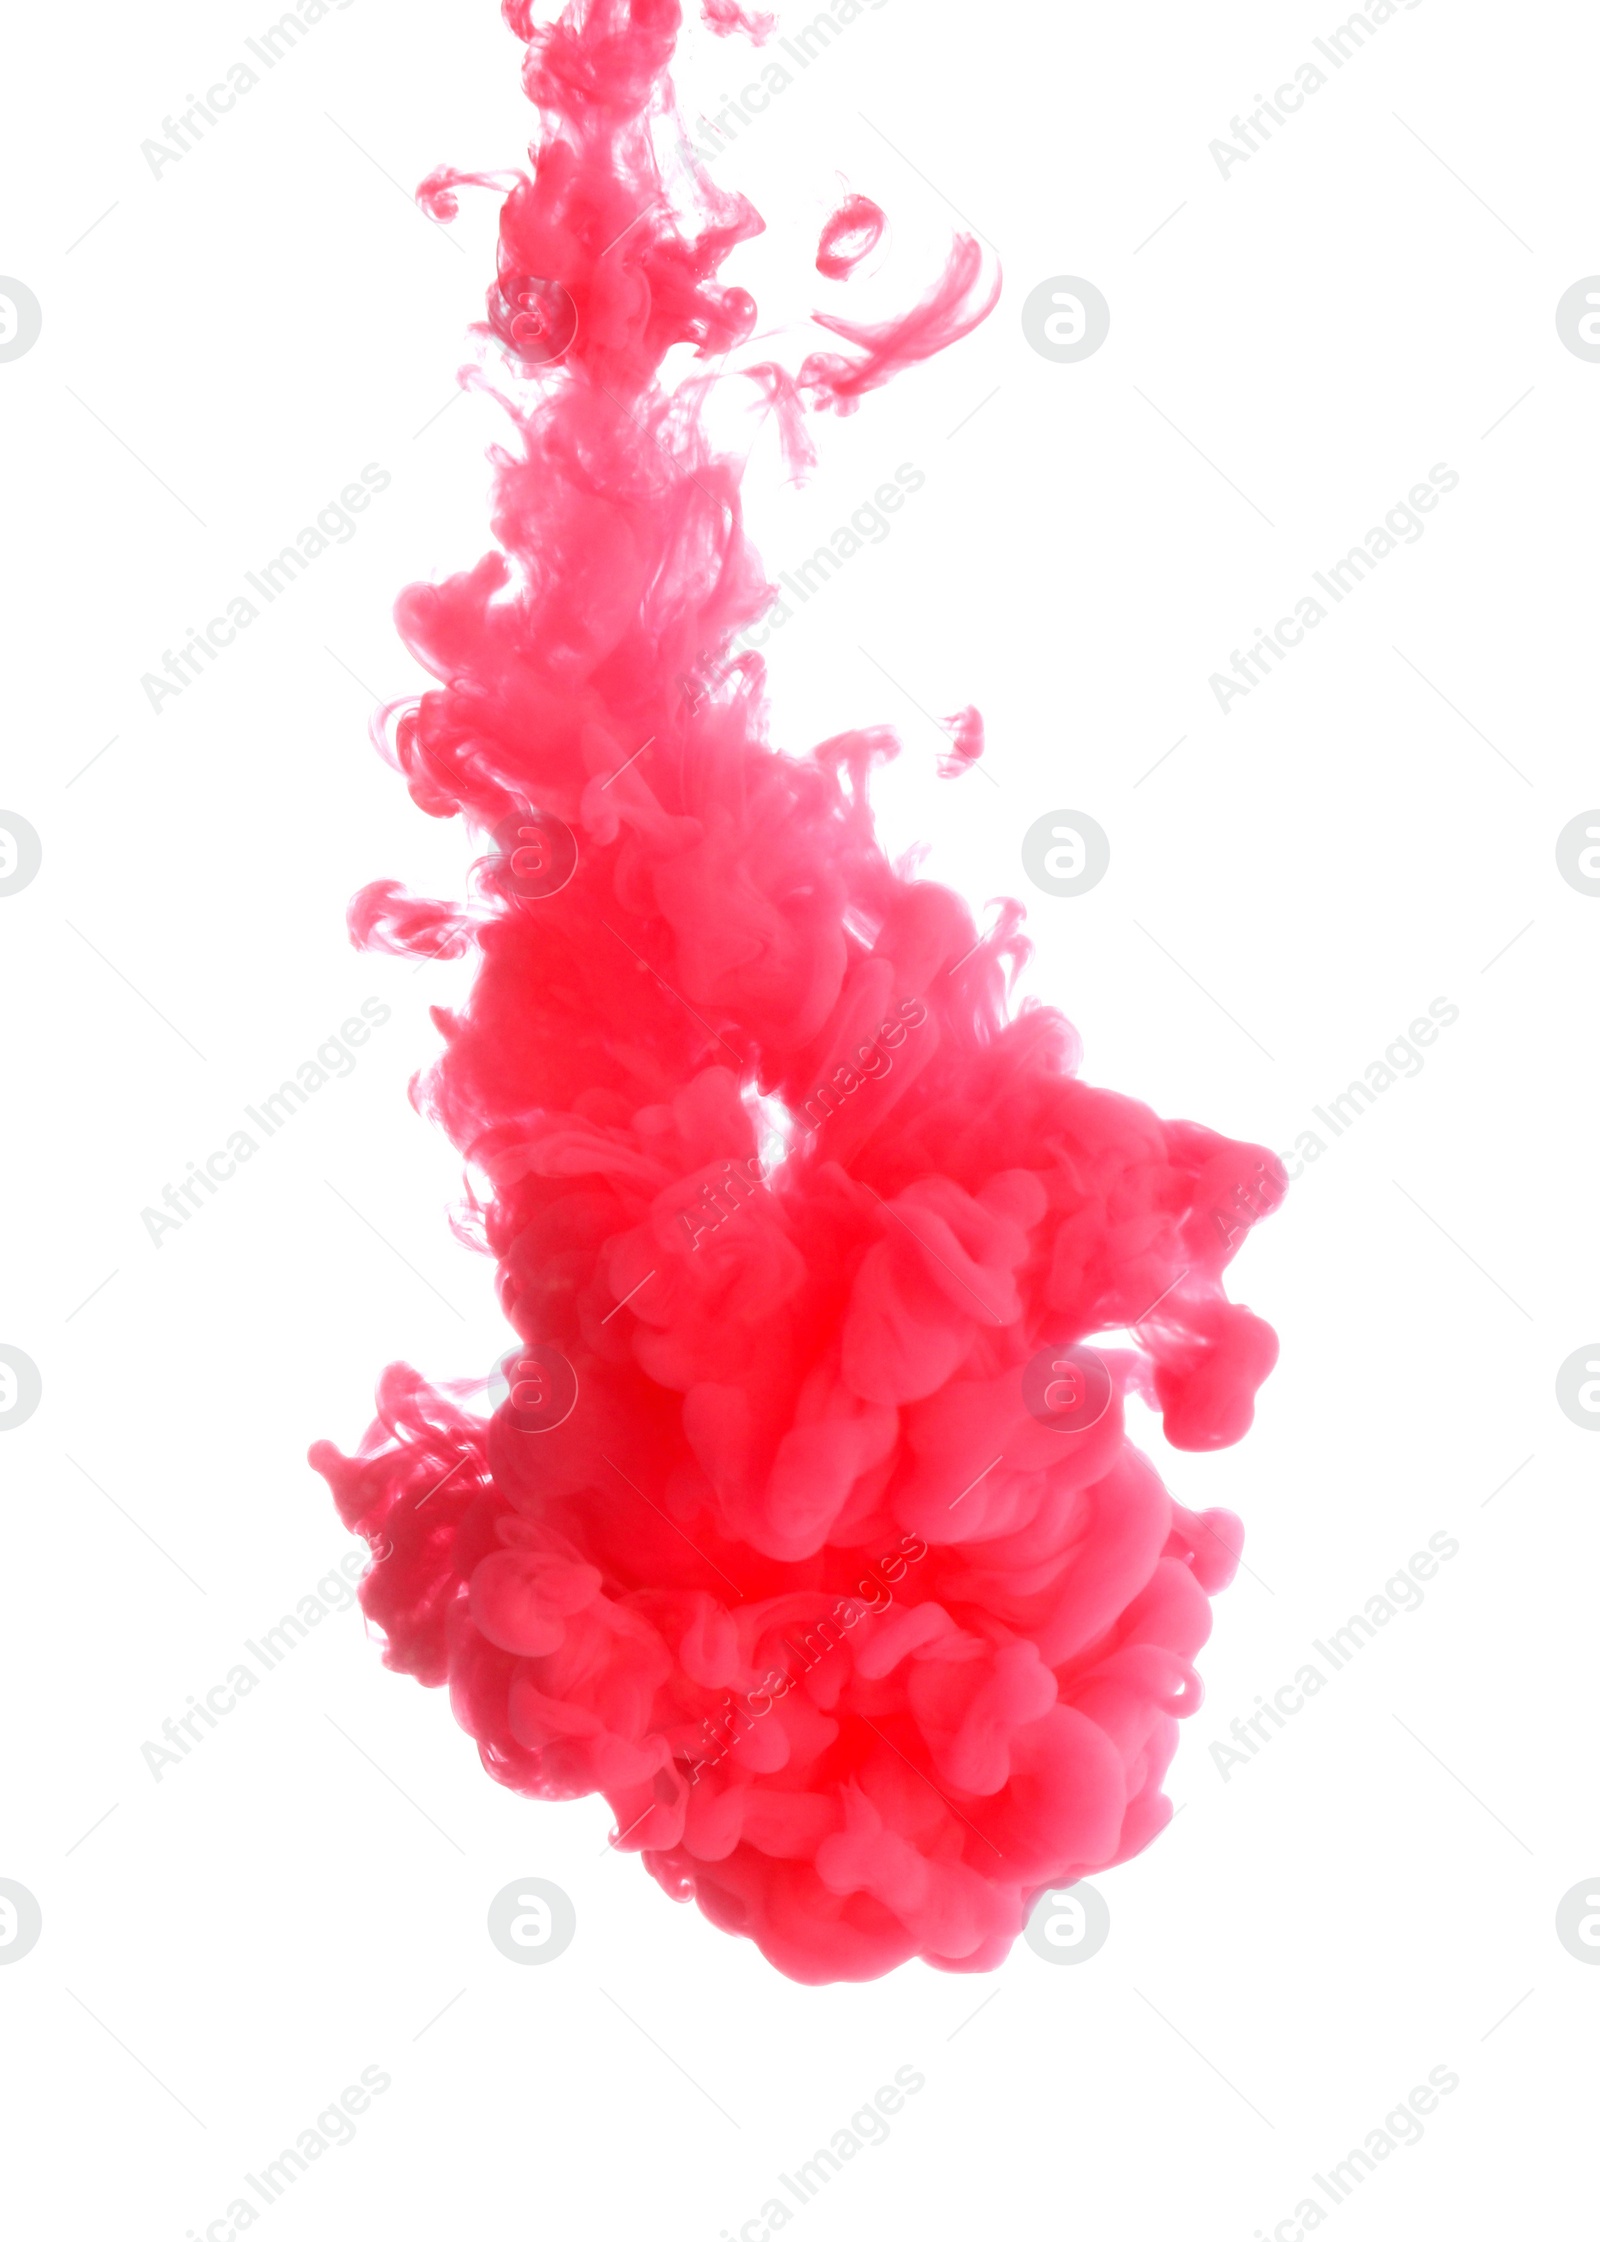 Photo of Splash of pink ink on light background